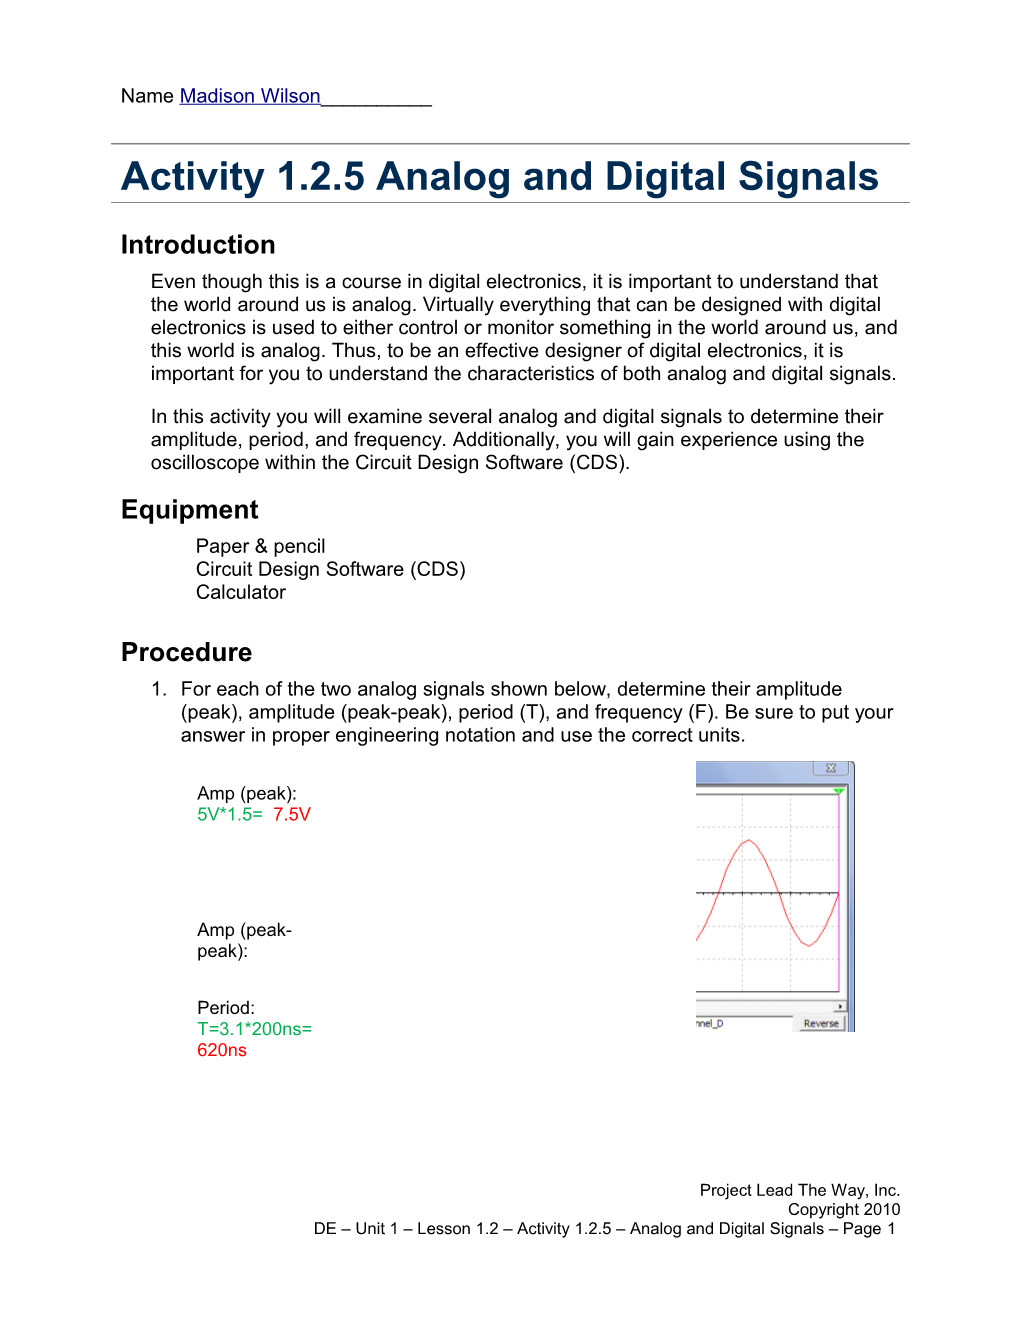 Activity 1.2.5 Analog and Digital Signals